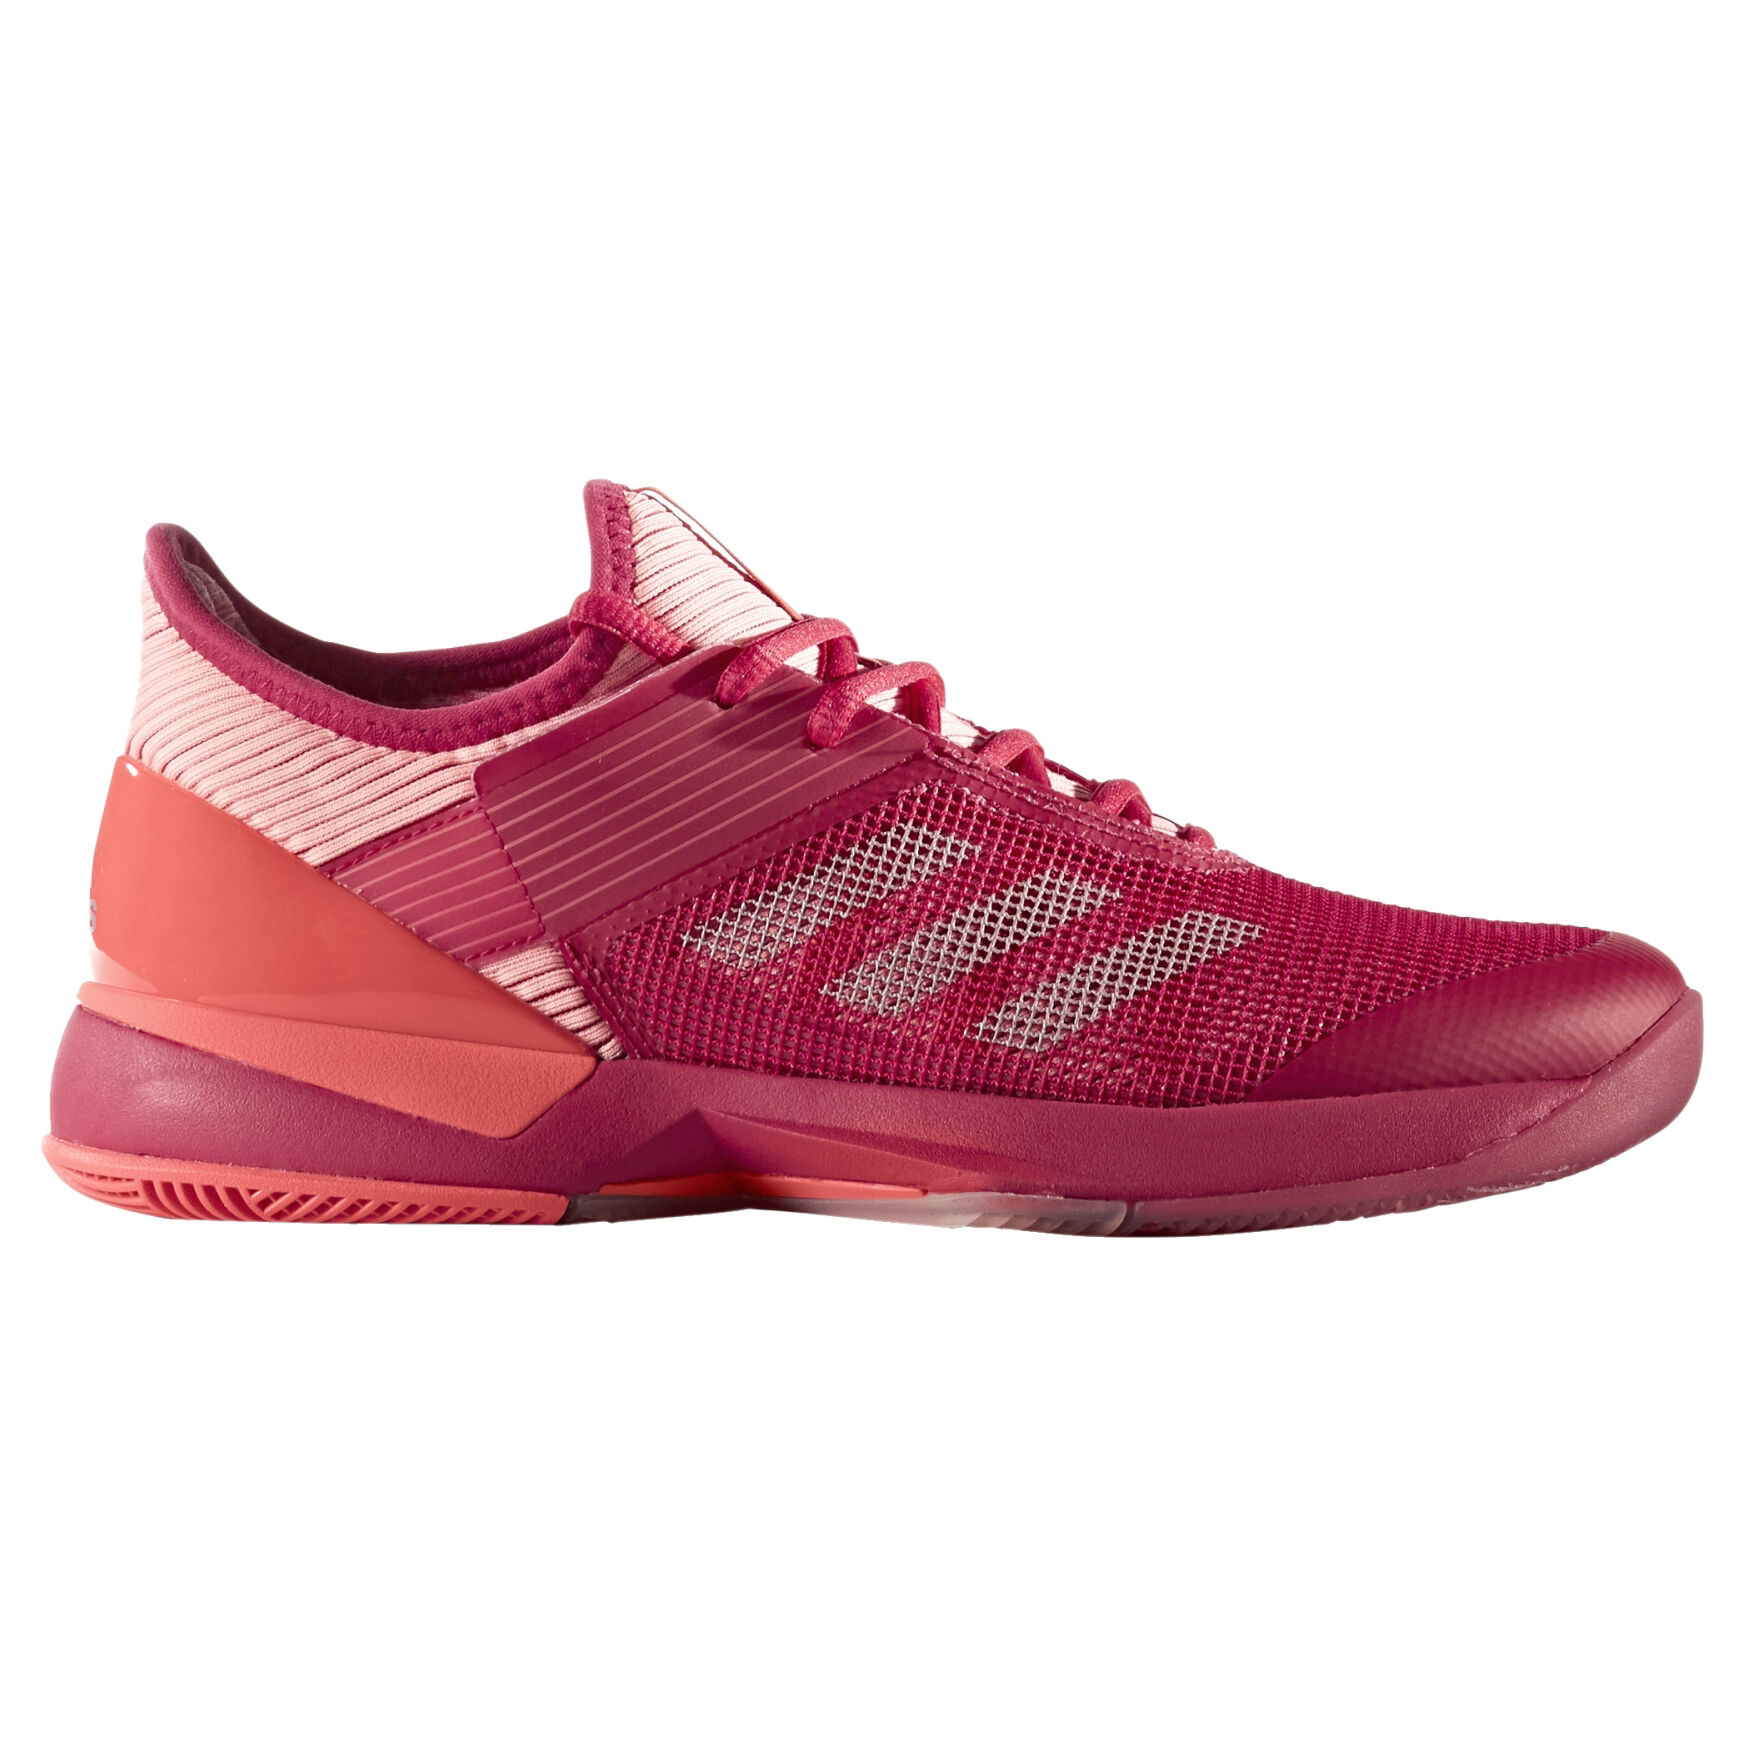 adidas women's ubersonic 3.0 tennis shoes